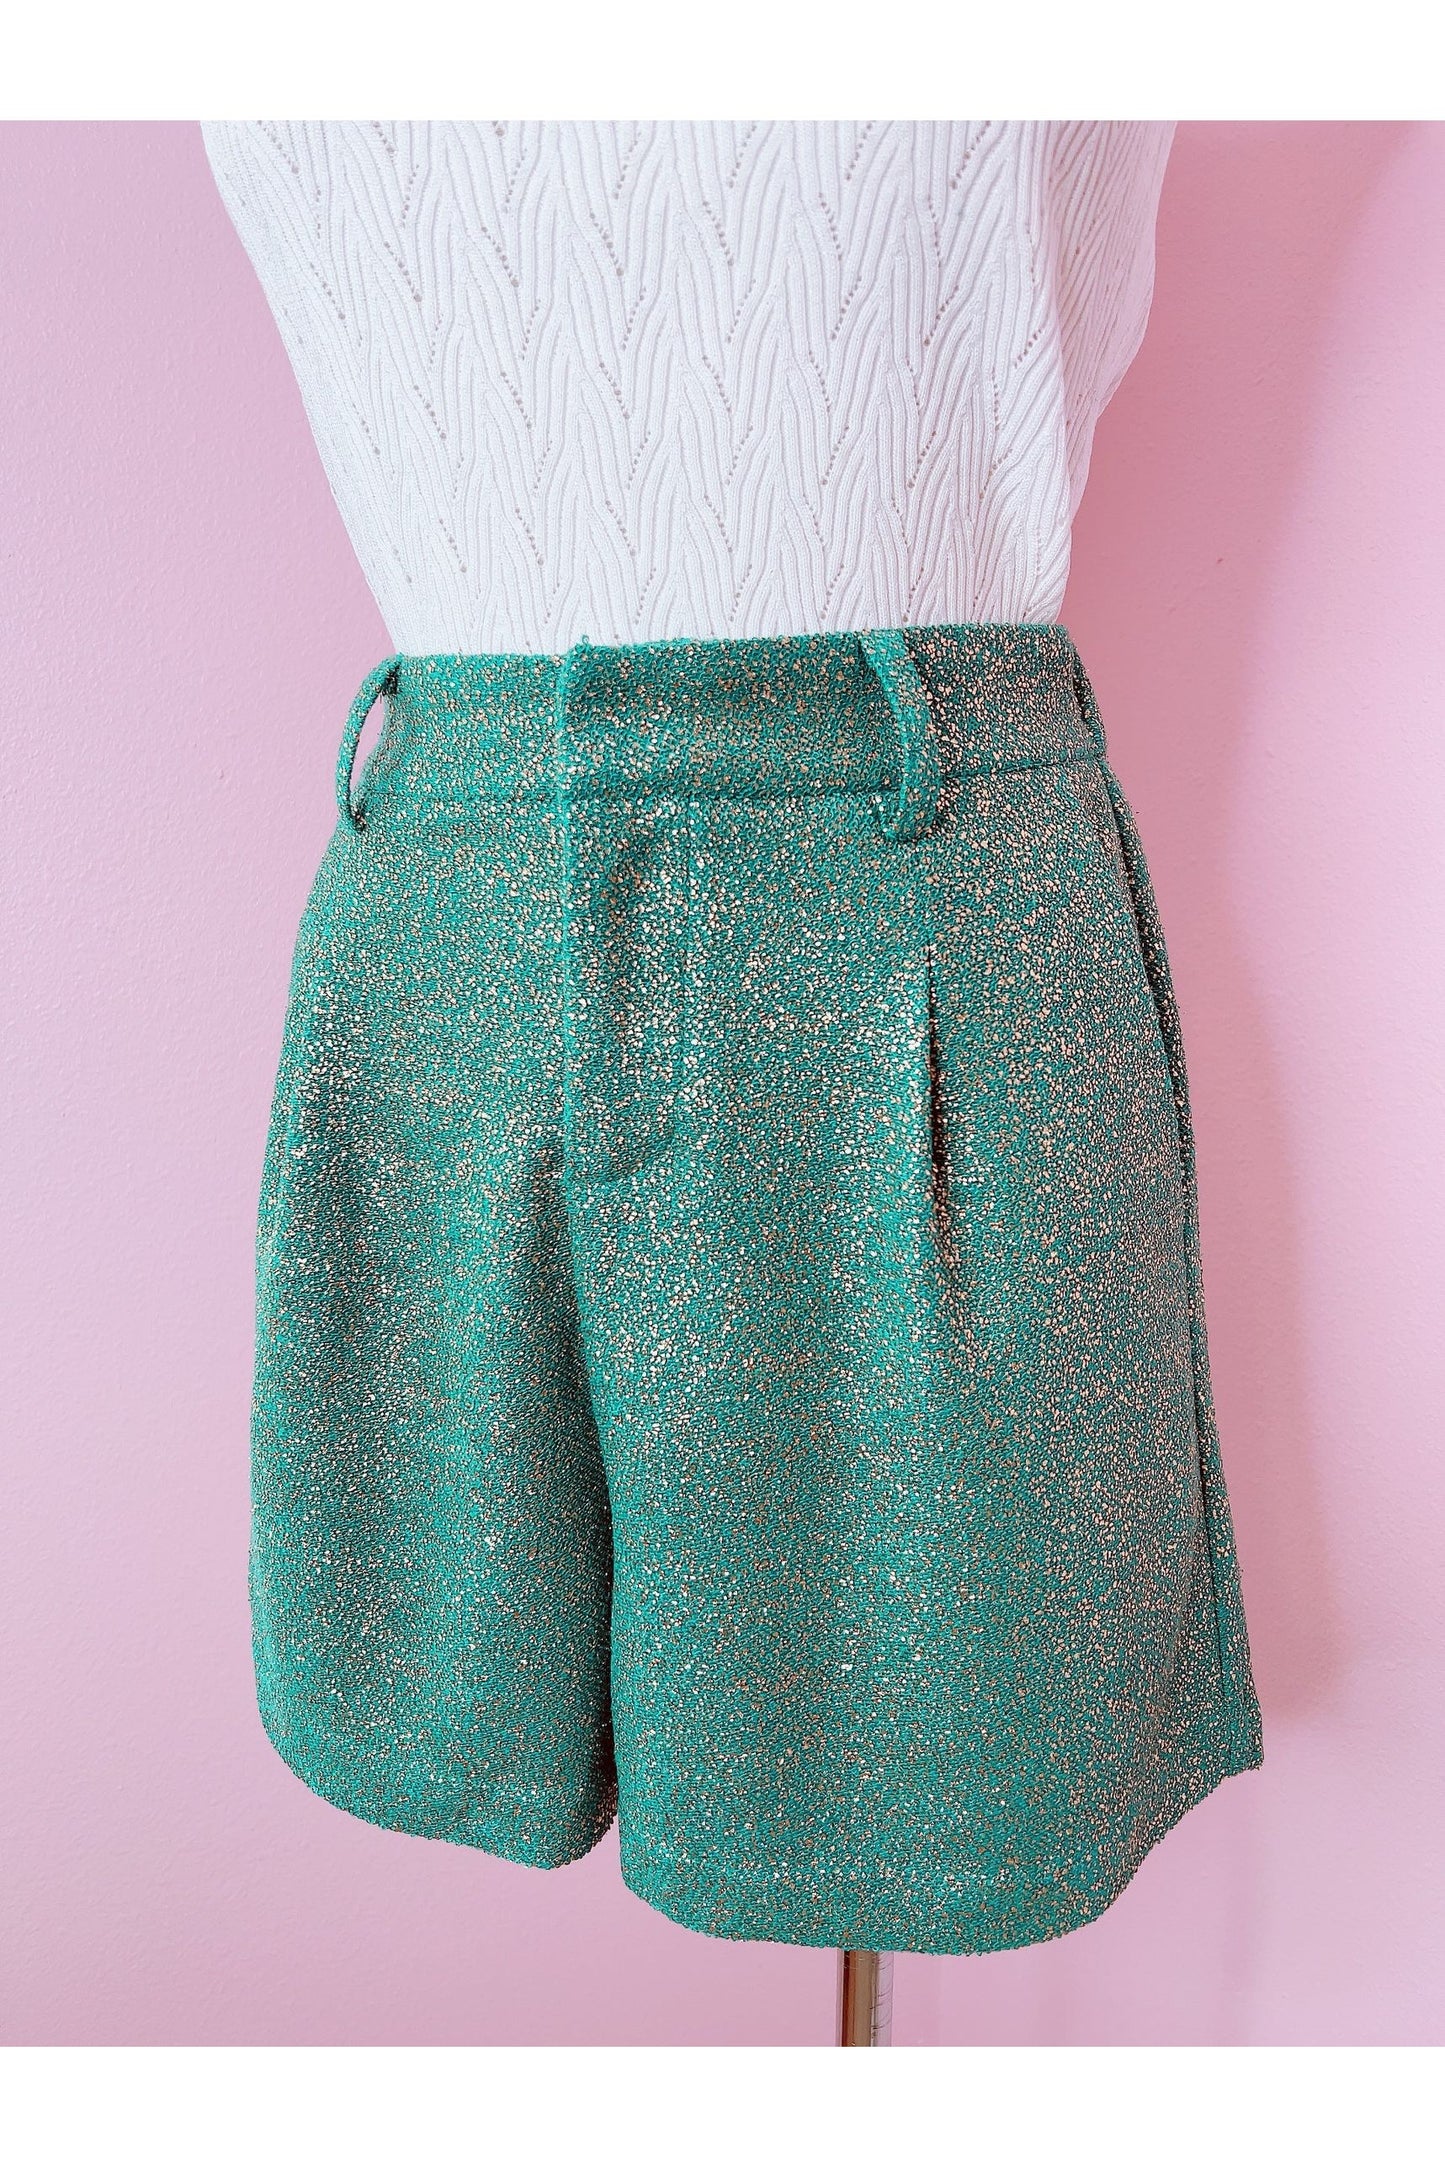 Hidden Treasures Gold Speck Sea Green Knit Shorts